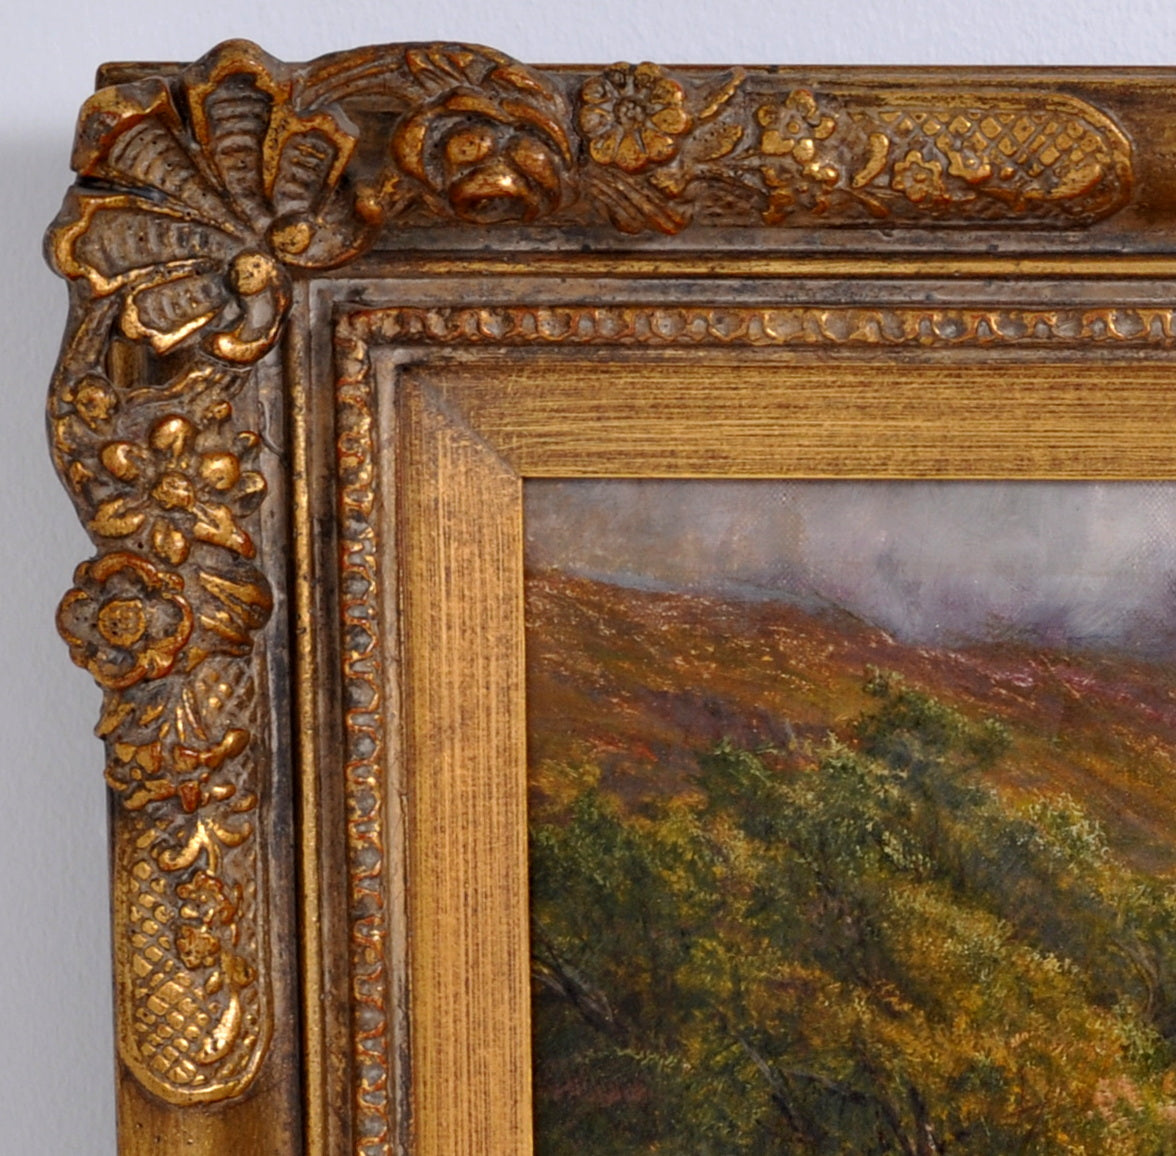 Antique 19th Century Scottish Highland Landscape Oil on Canvas Painting, Circa 1850